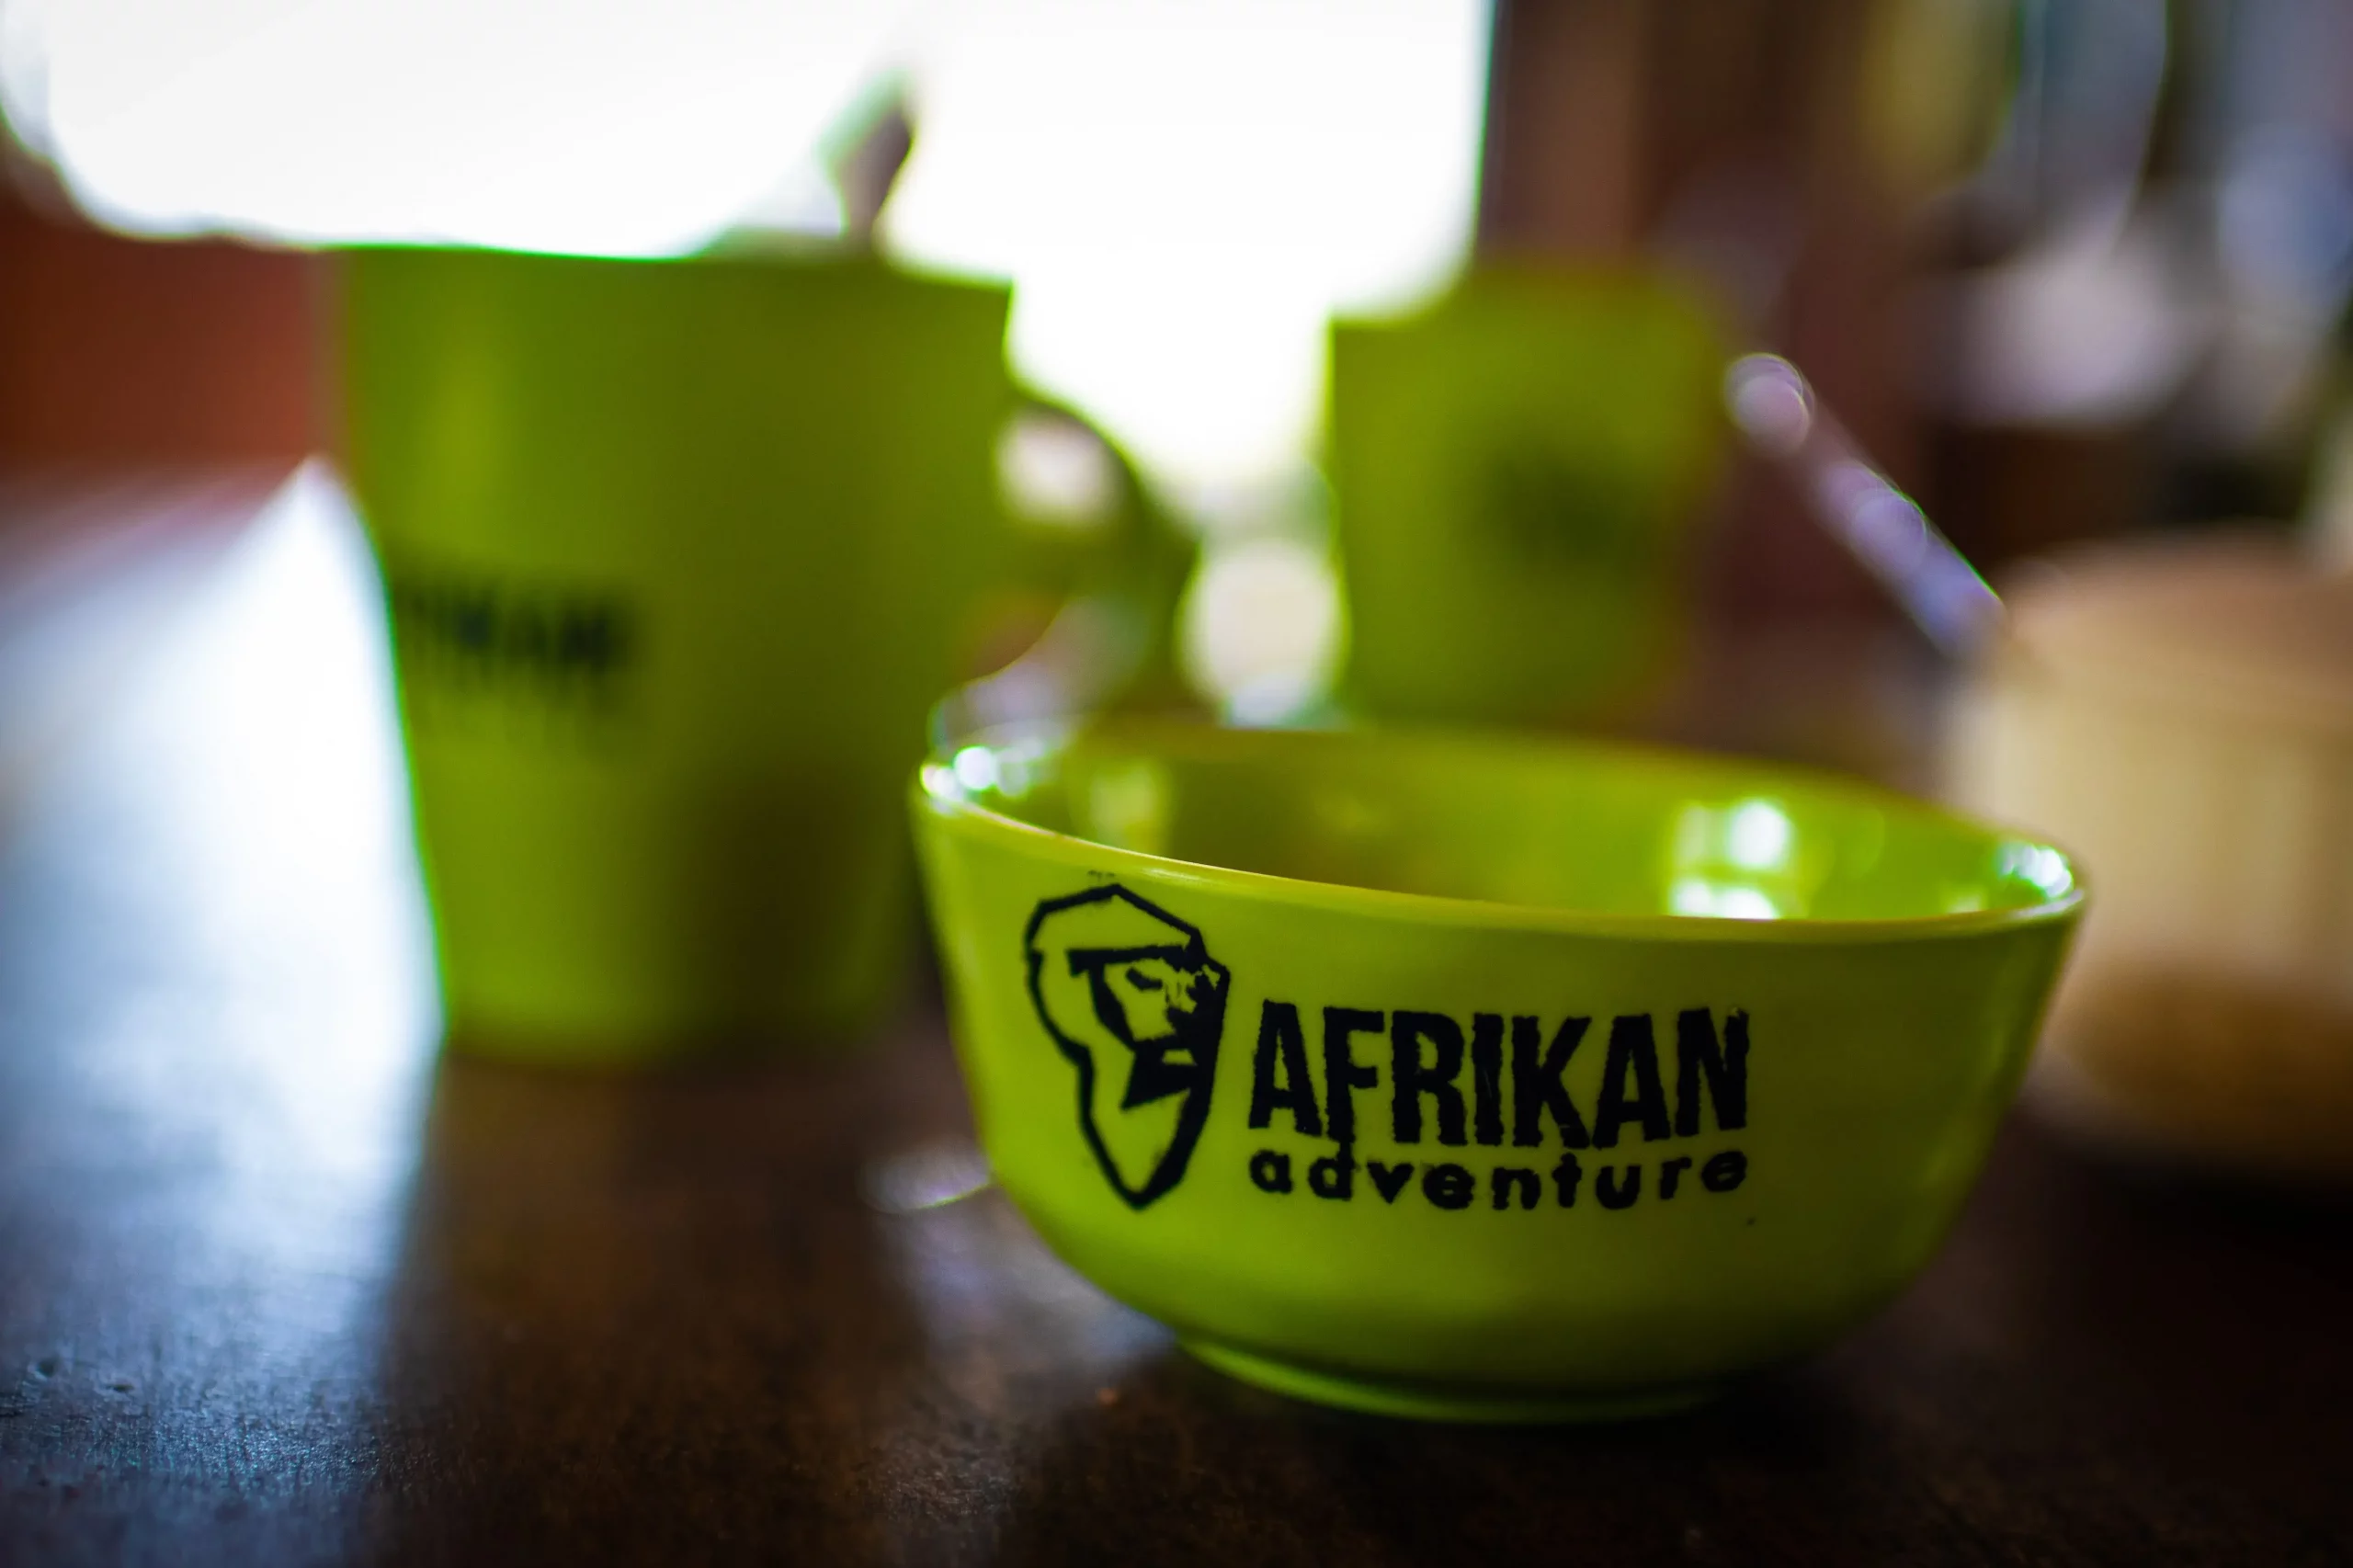 Afrikan adventures soup bowls